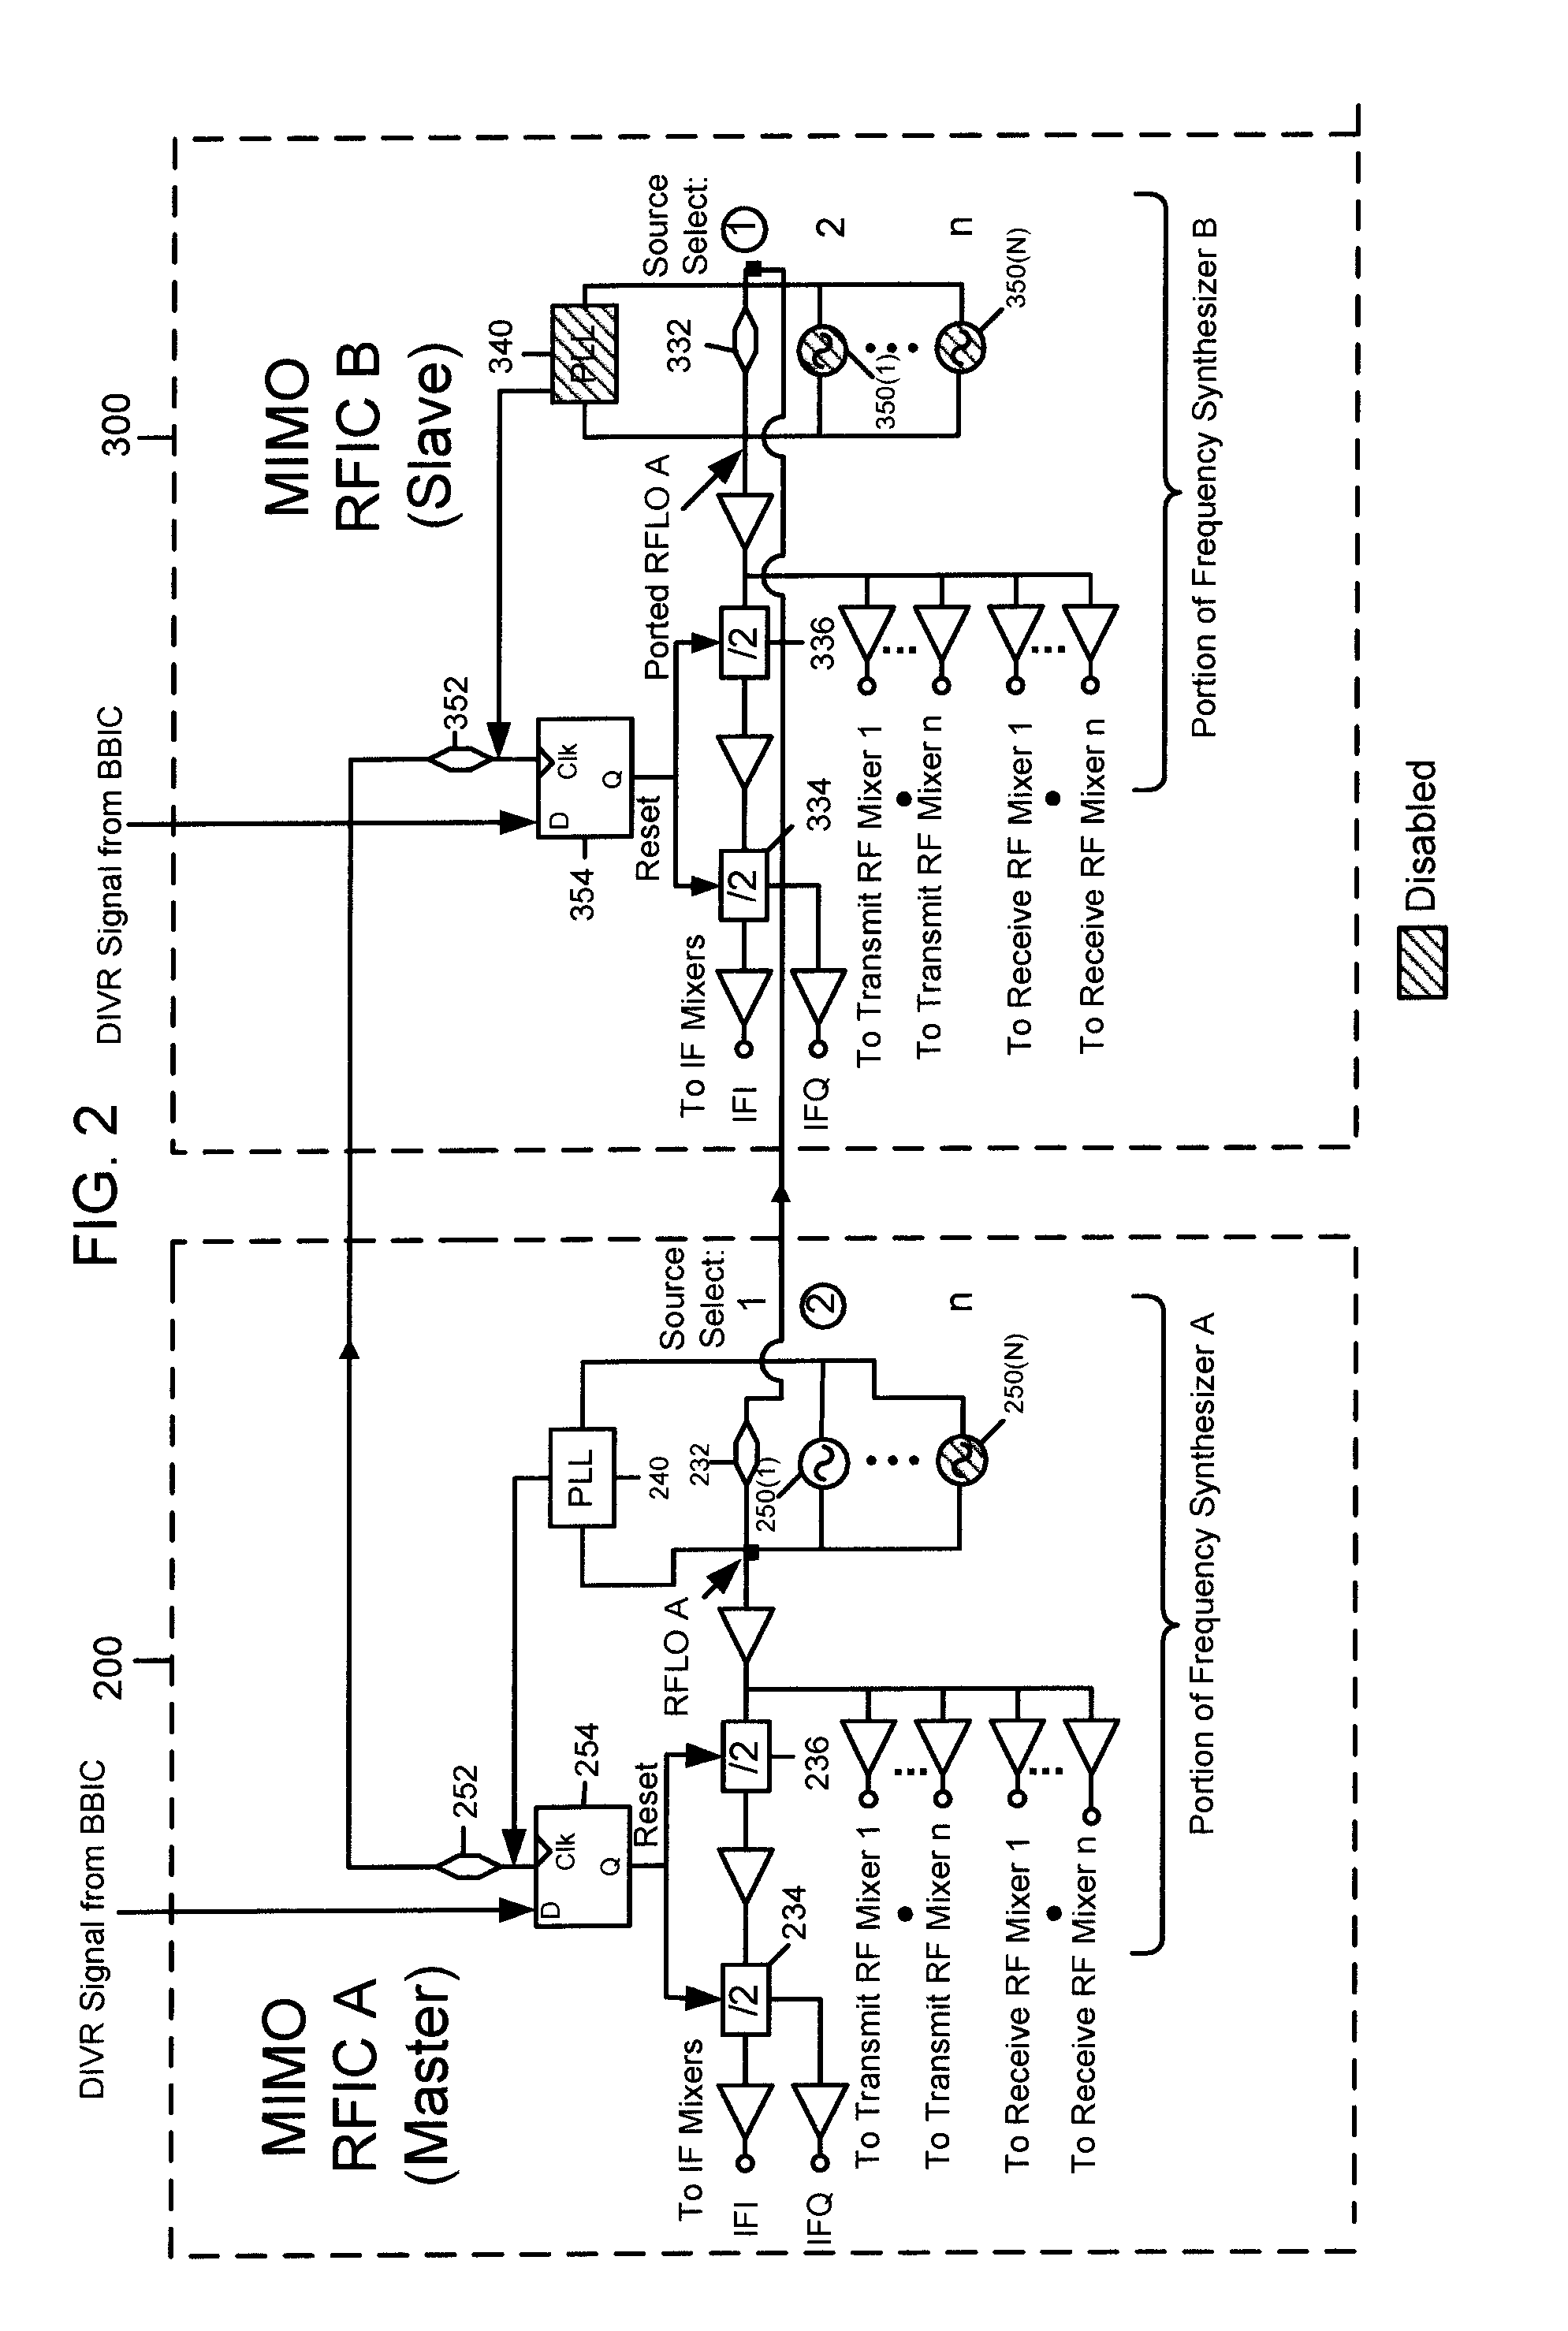 Master-Slave Local Oscillator Porting Between Radio Integrated Circuits